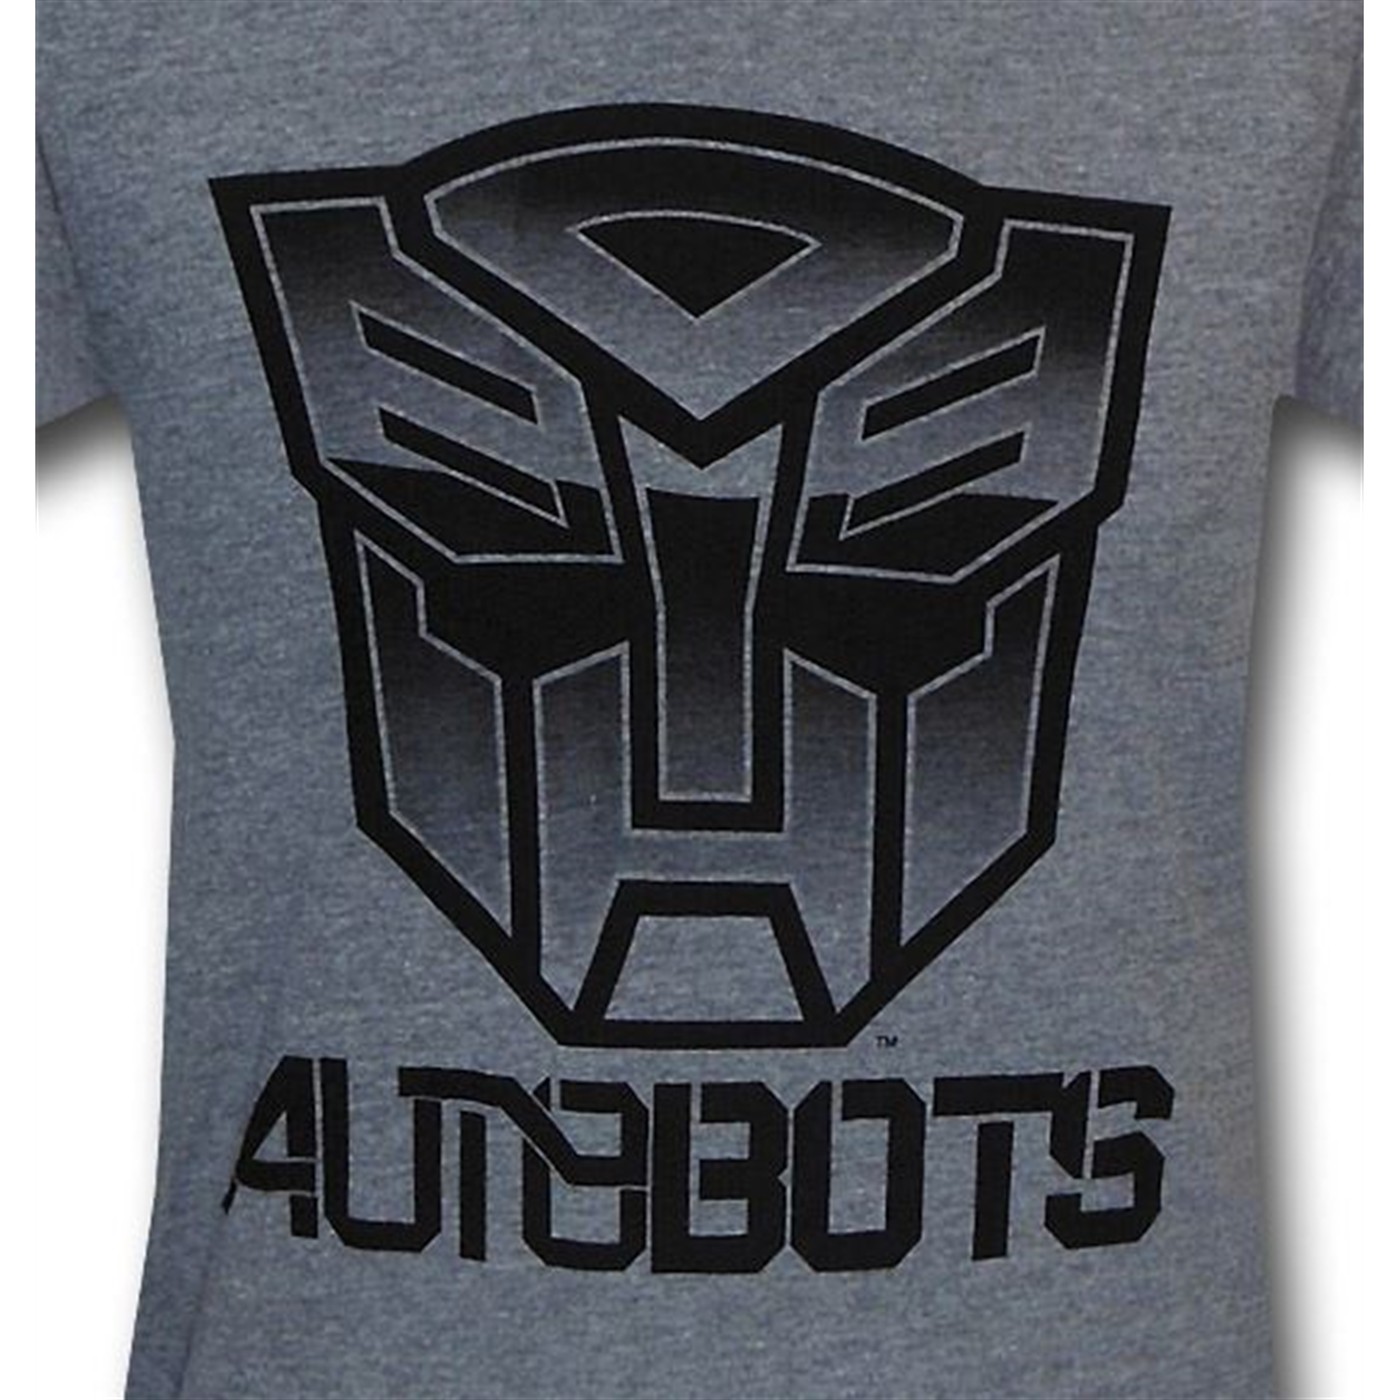 Transformers Autobot Grey Triblend T-Shirt